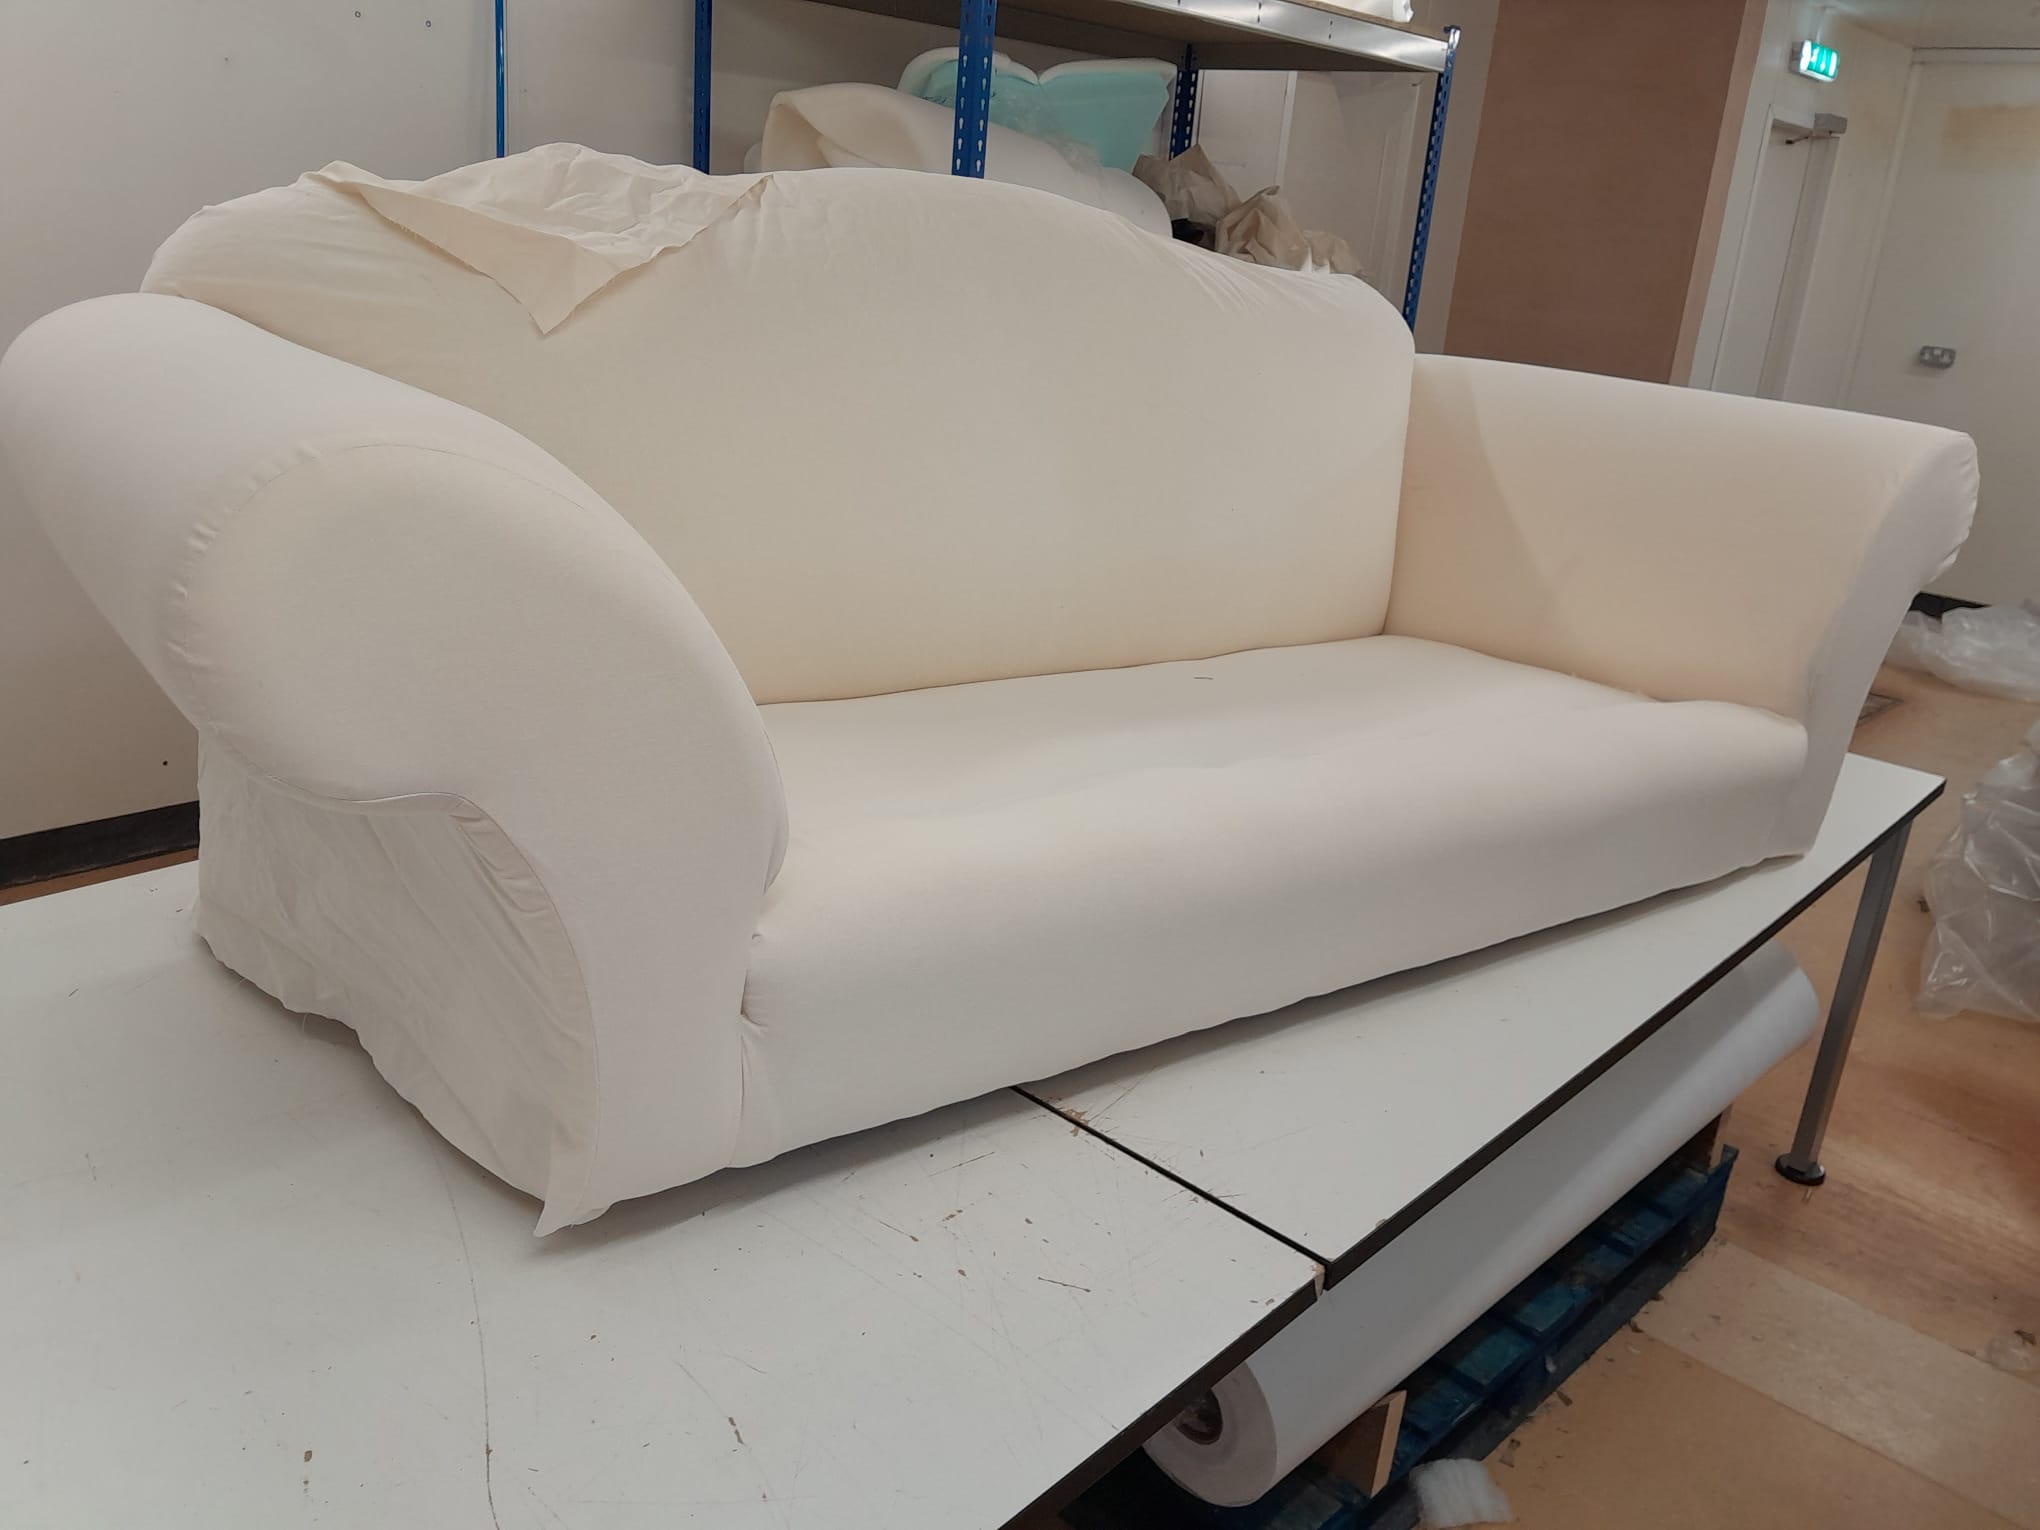 multiyork furniture upholstery - replace webbing or barrier cloth